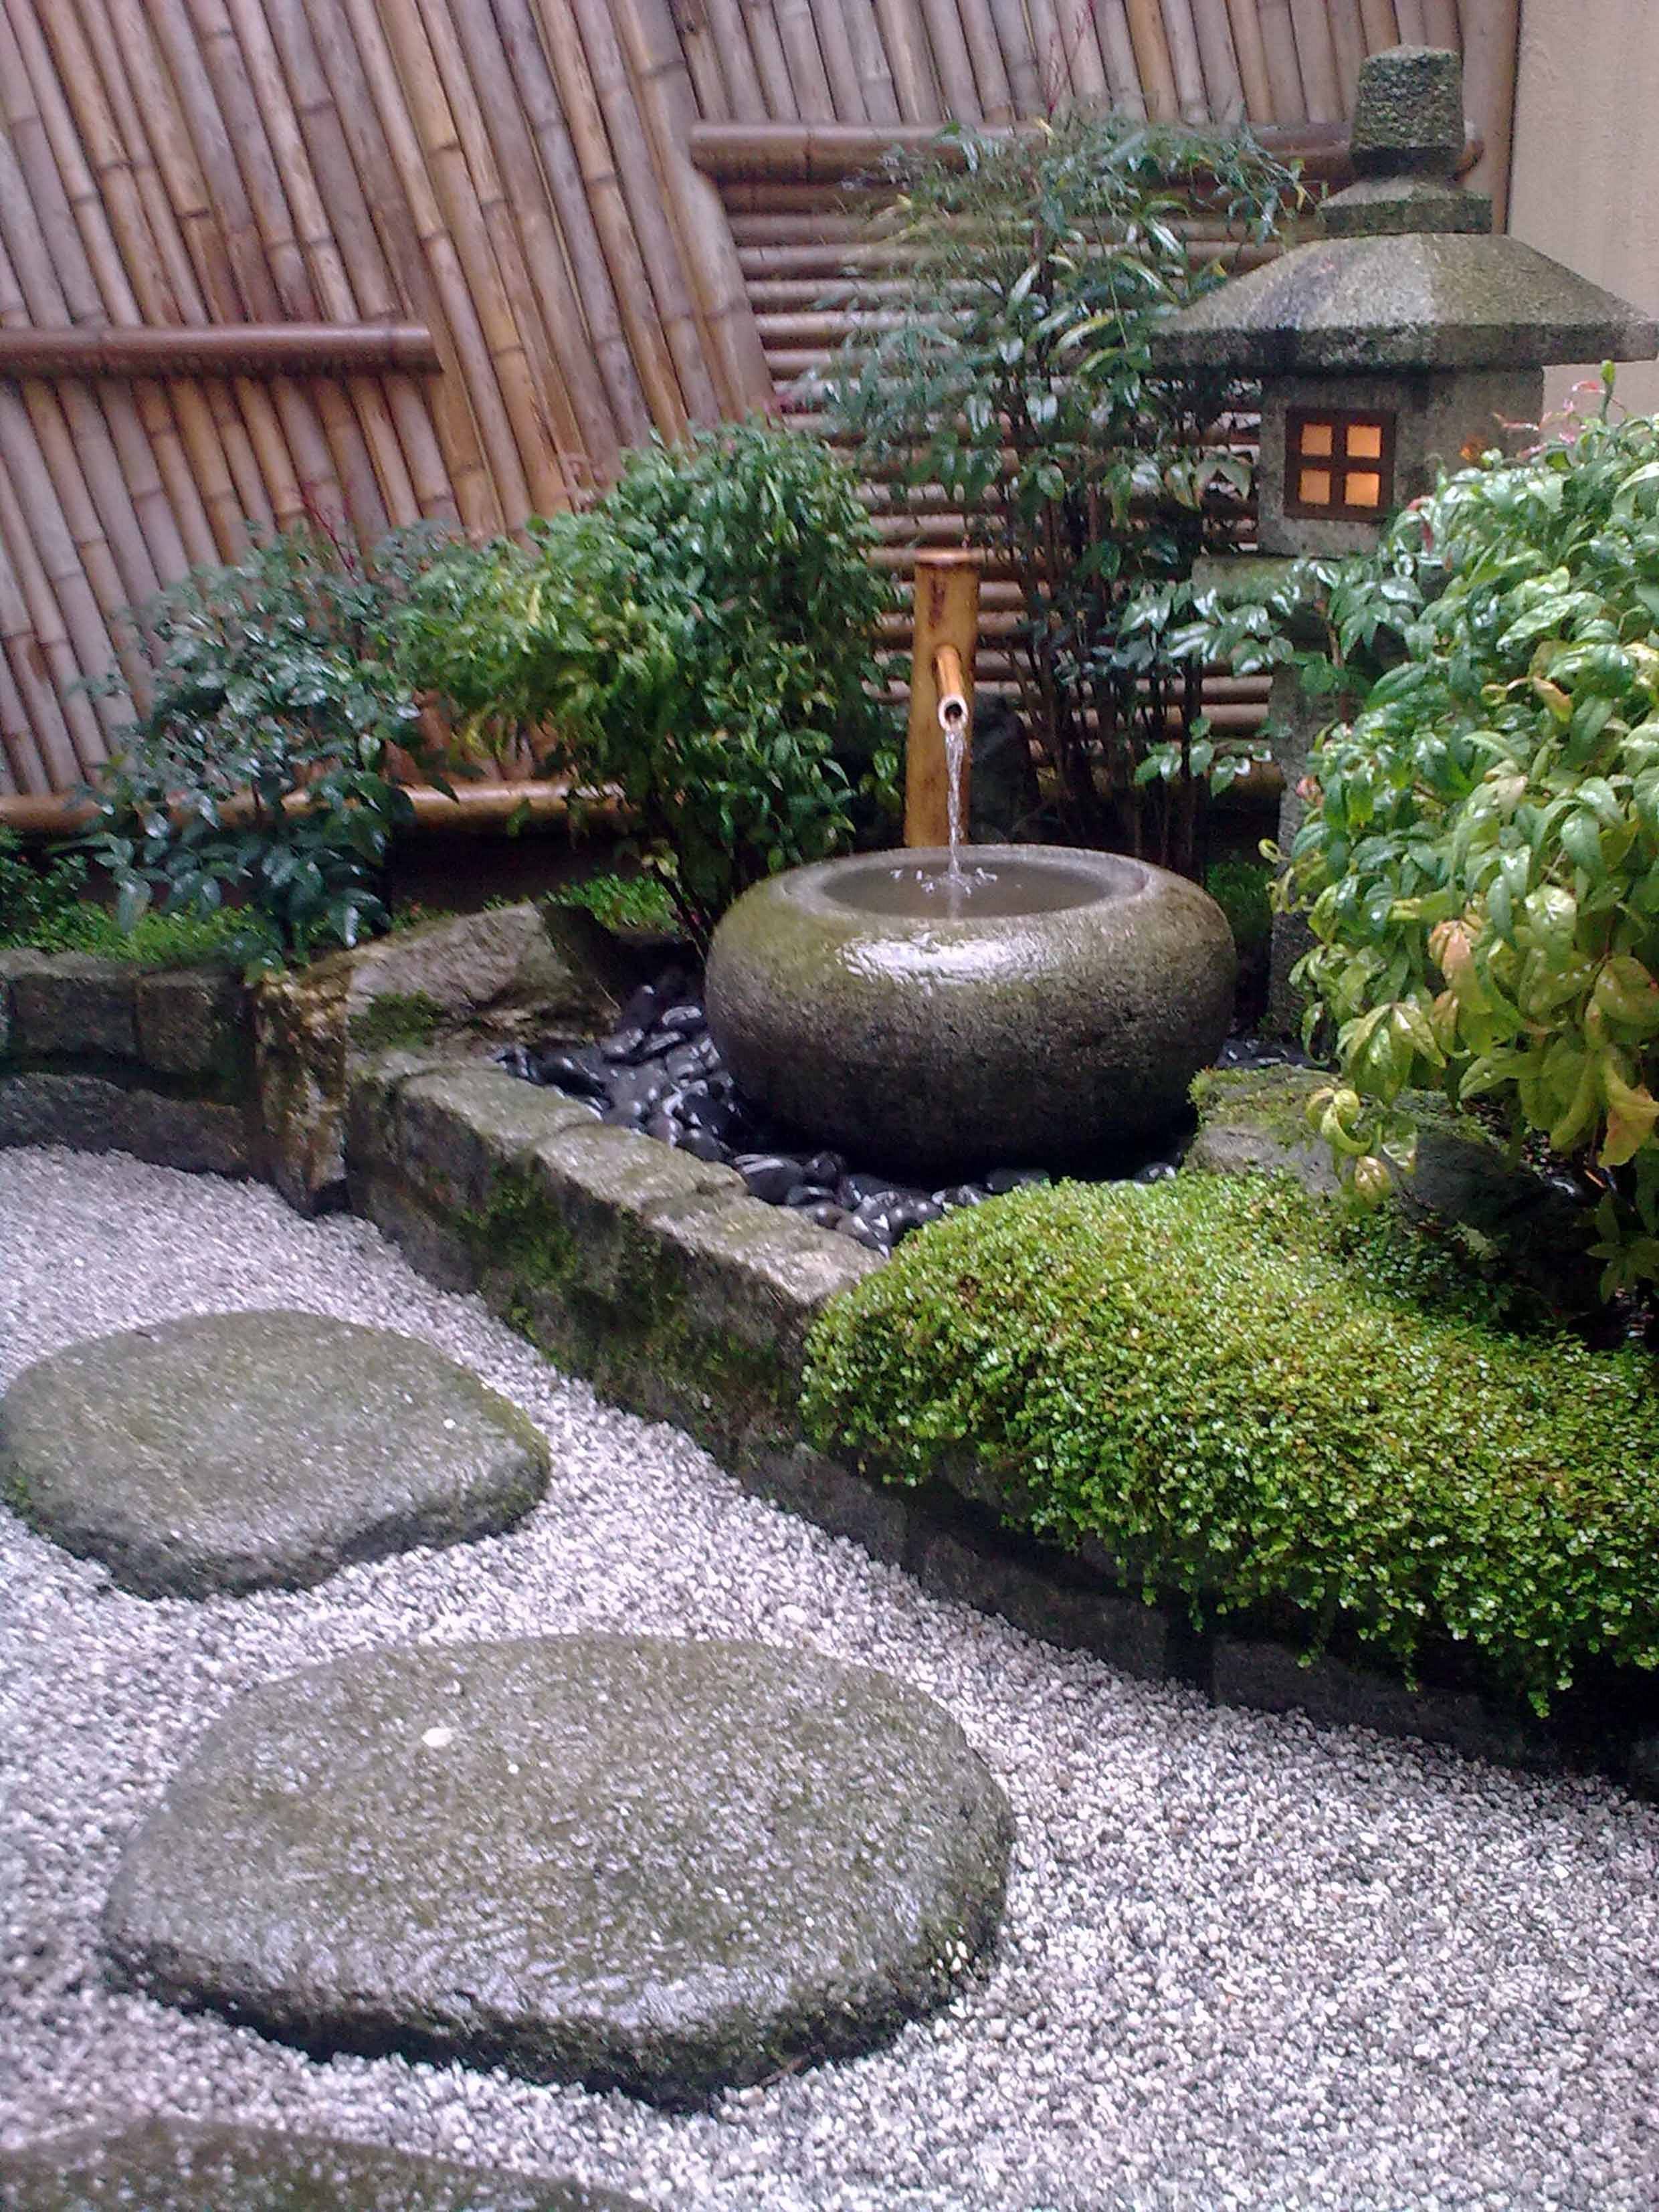 Peacefully Japanese Zen Garden Gallery Inspirations